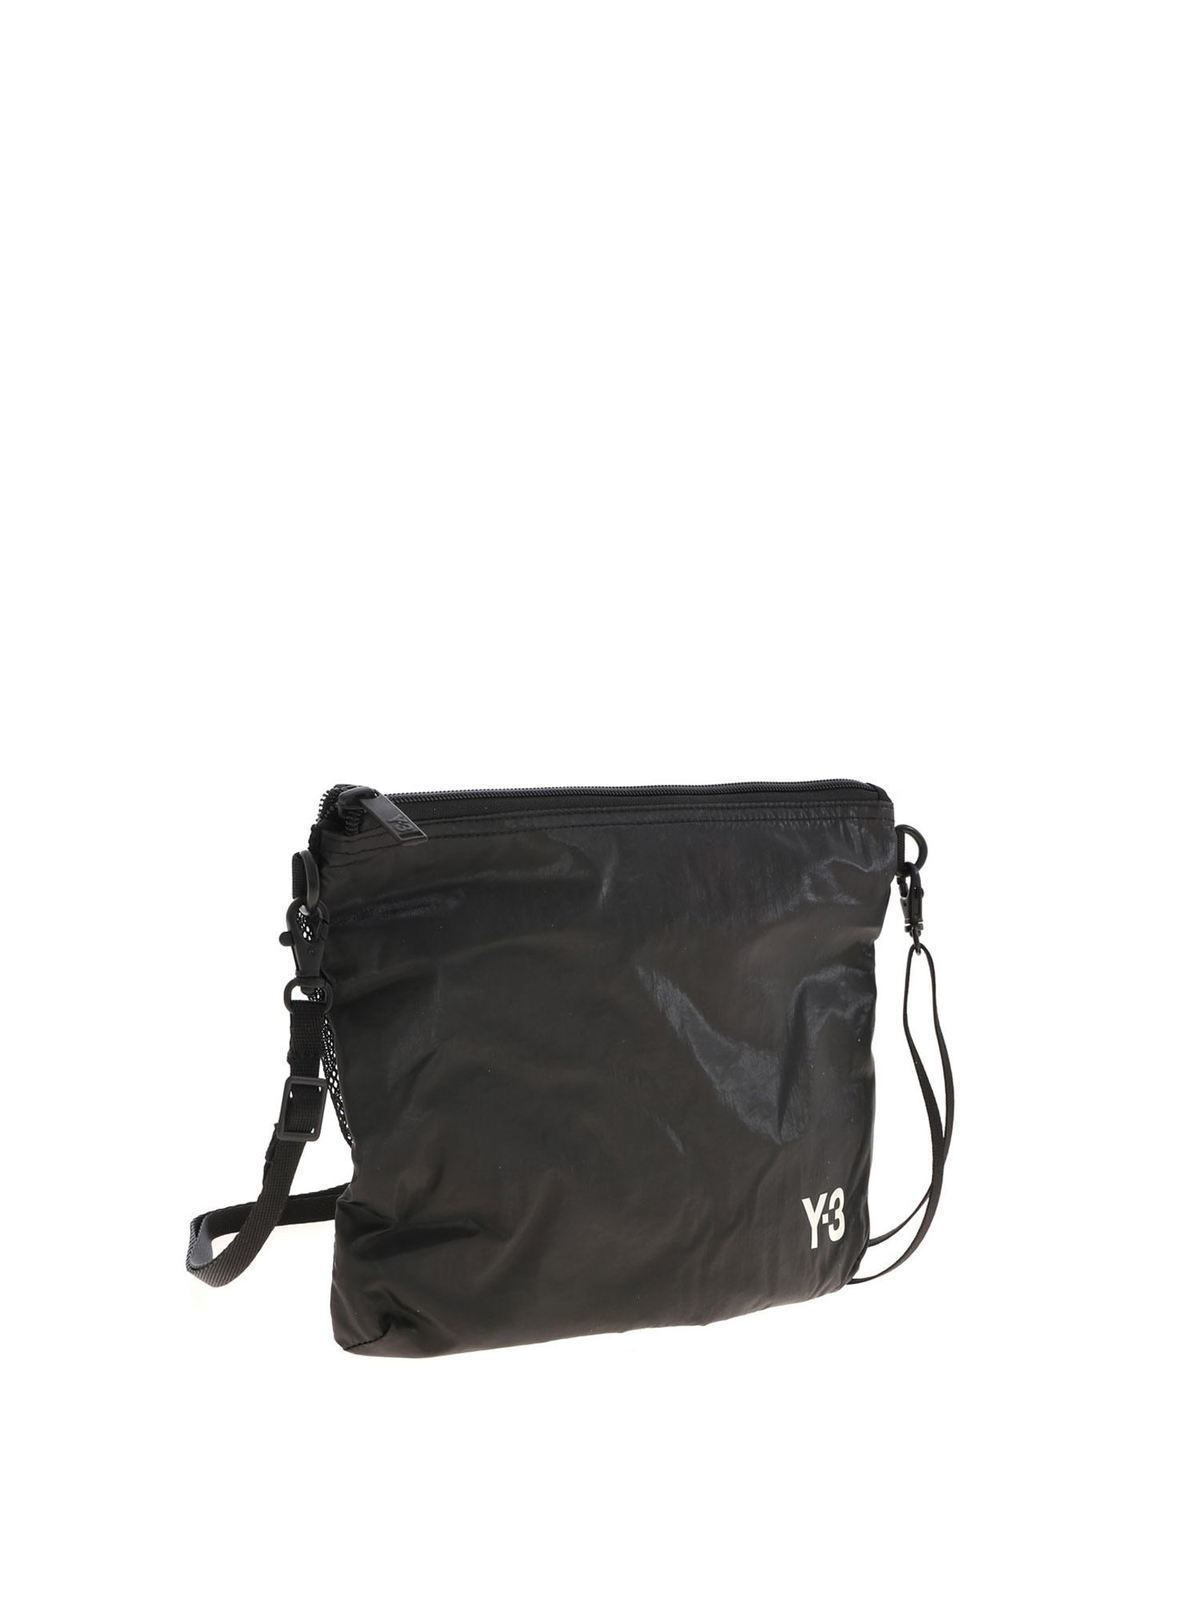 Cross body bags Y3 By Yohji Yamamoto - Mesh details clutch bag in 